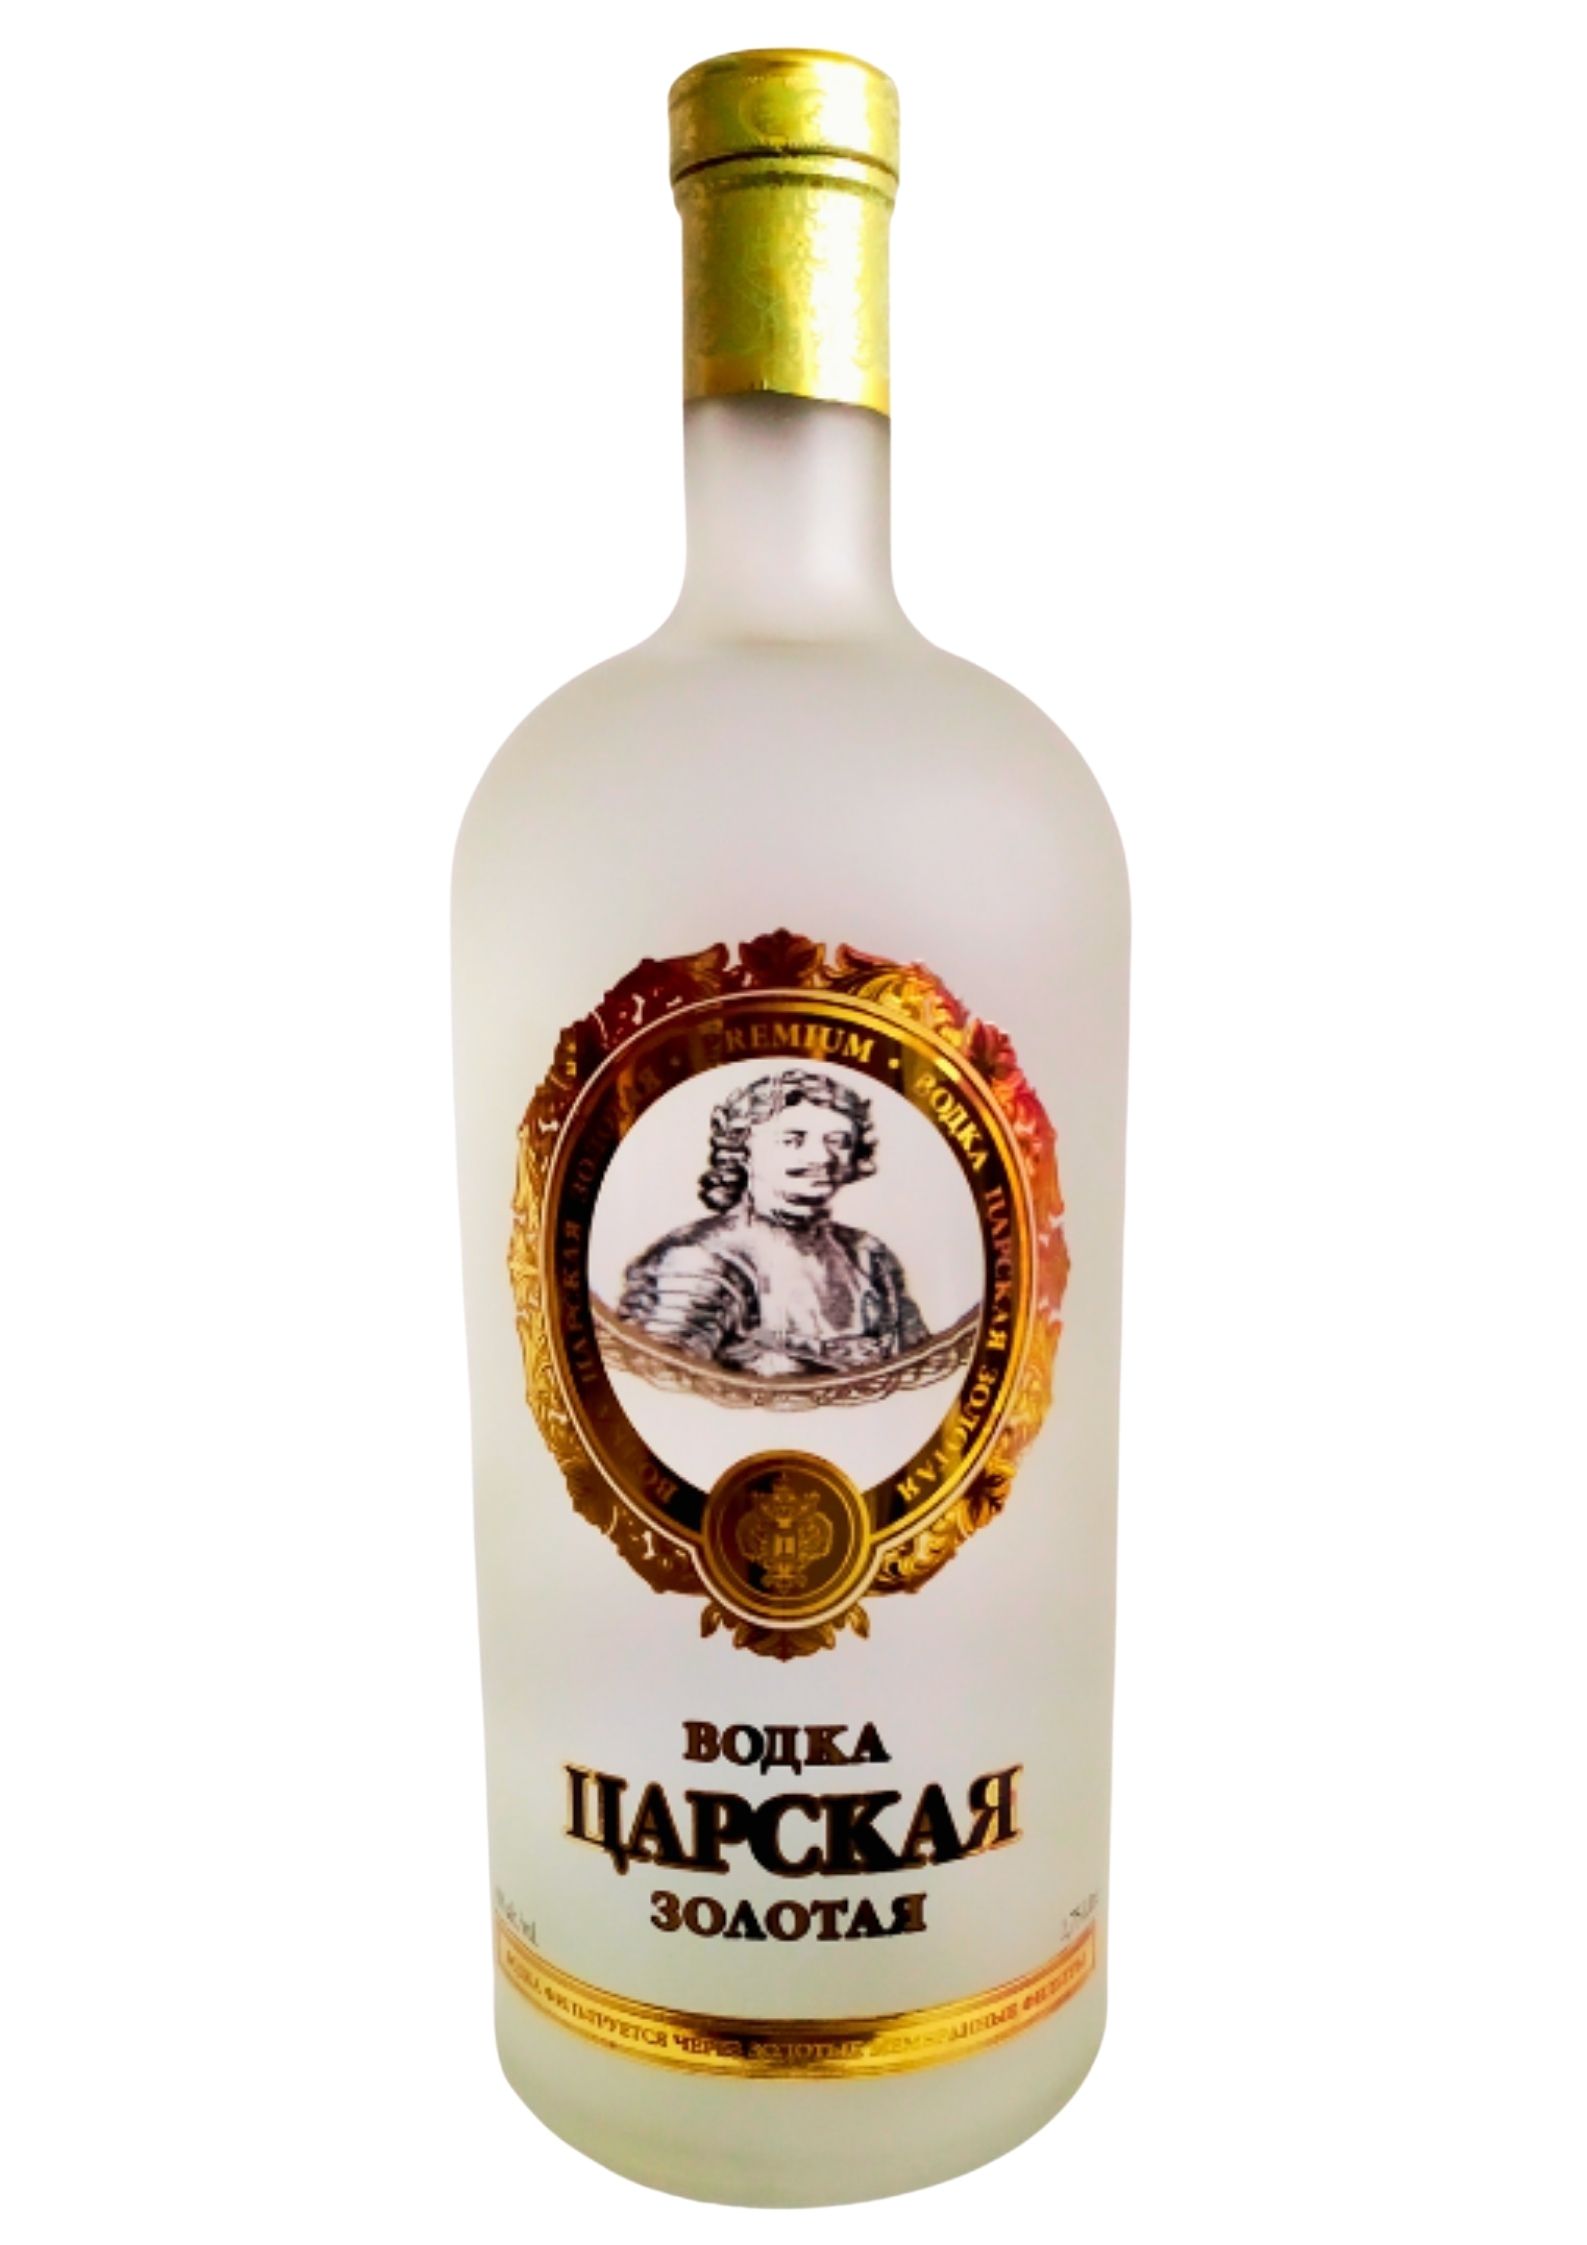 Magnum Tsarskaya Gold Vodka Russe